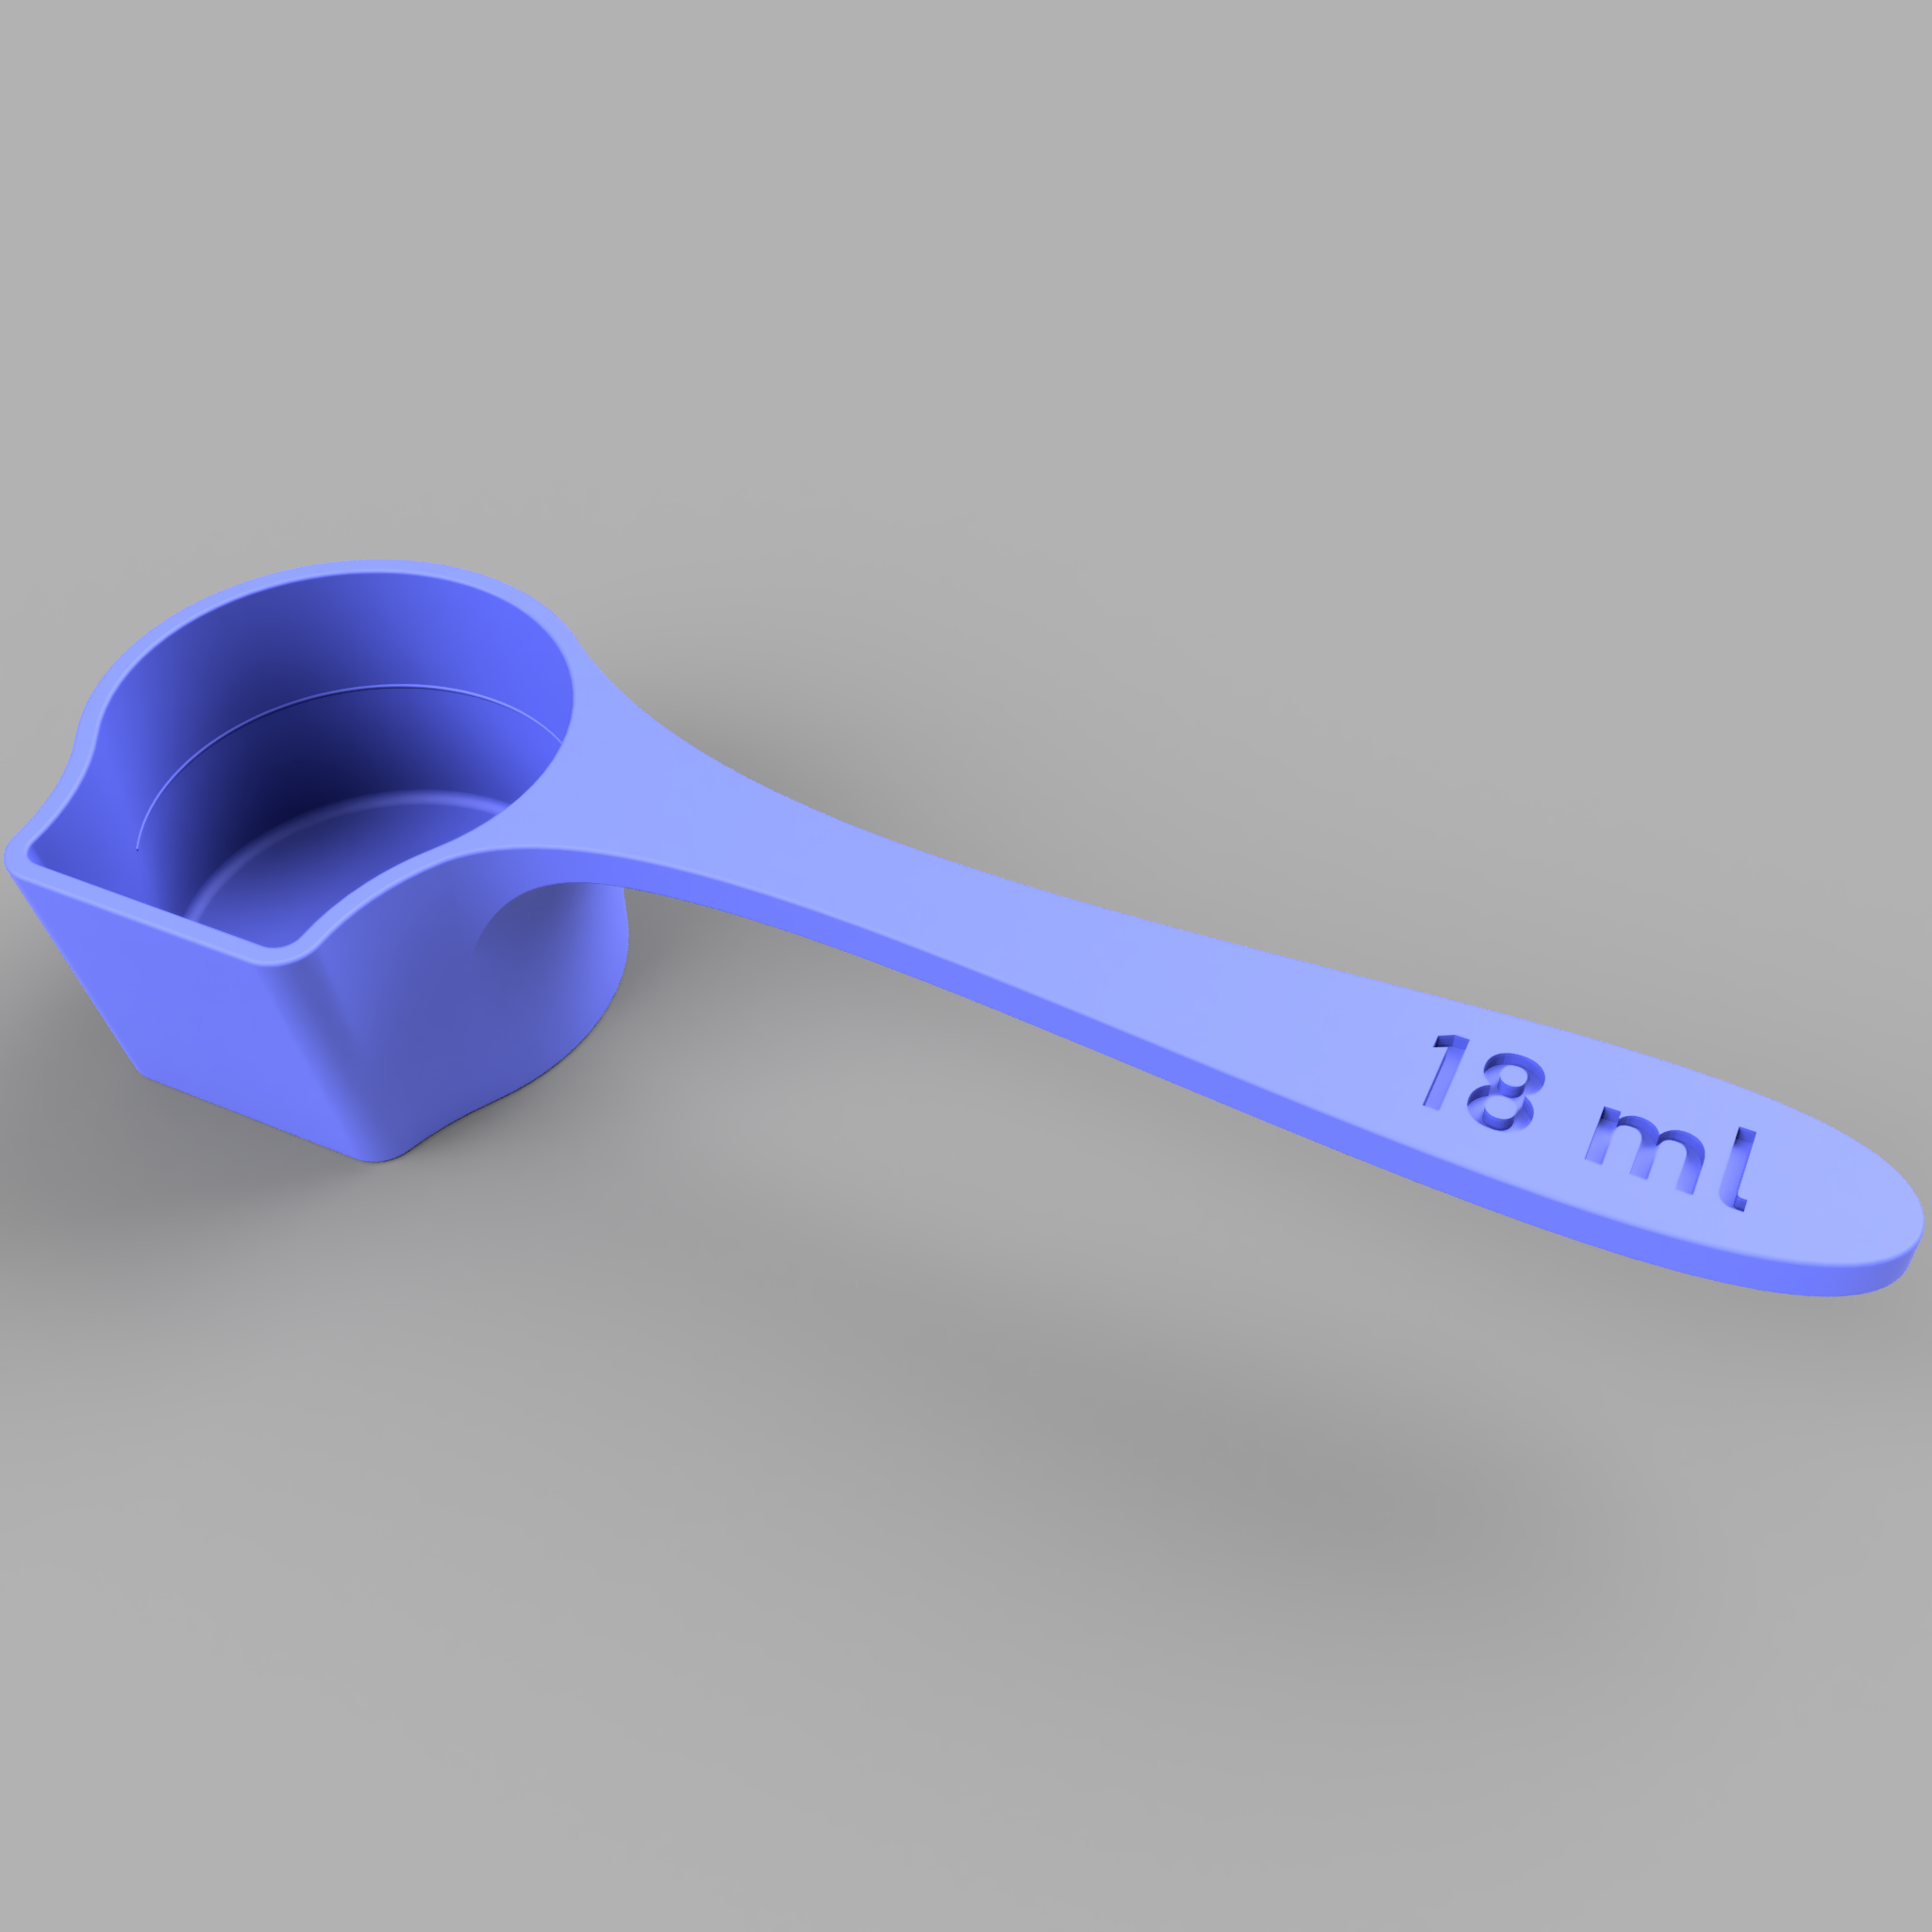 18 ml Measuring spoon (Single or dual color)